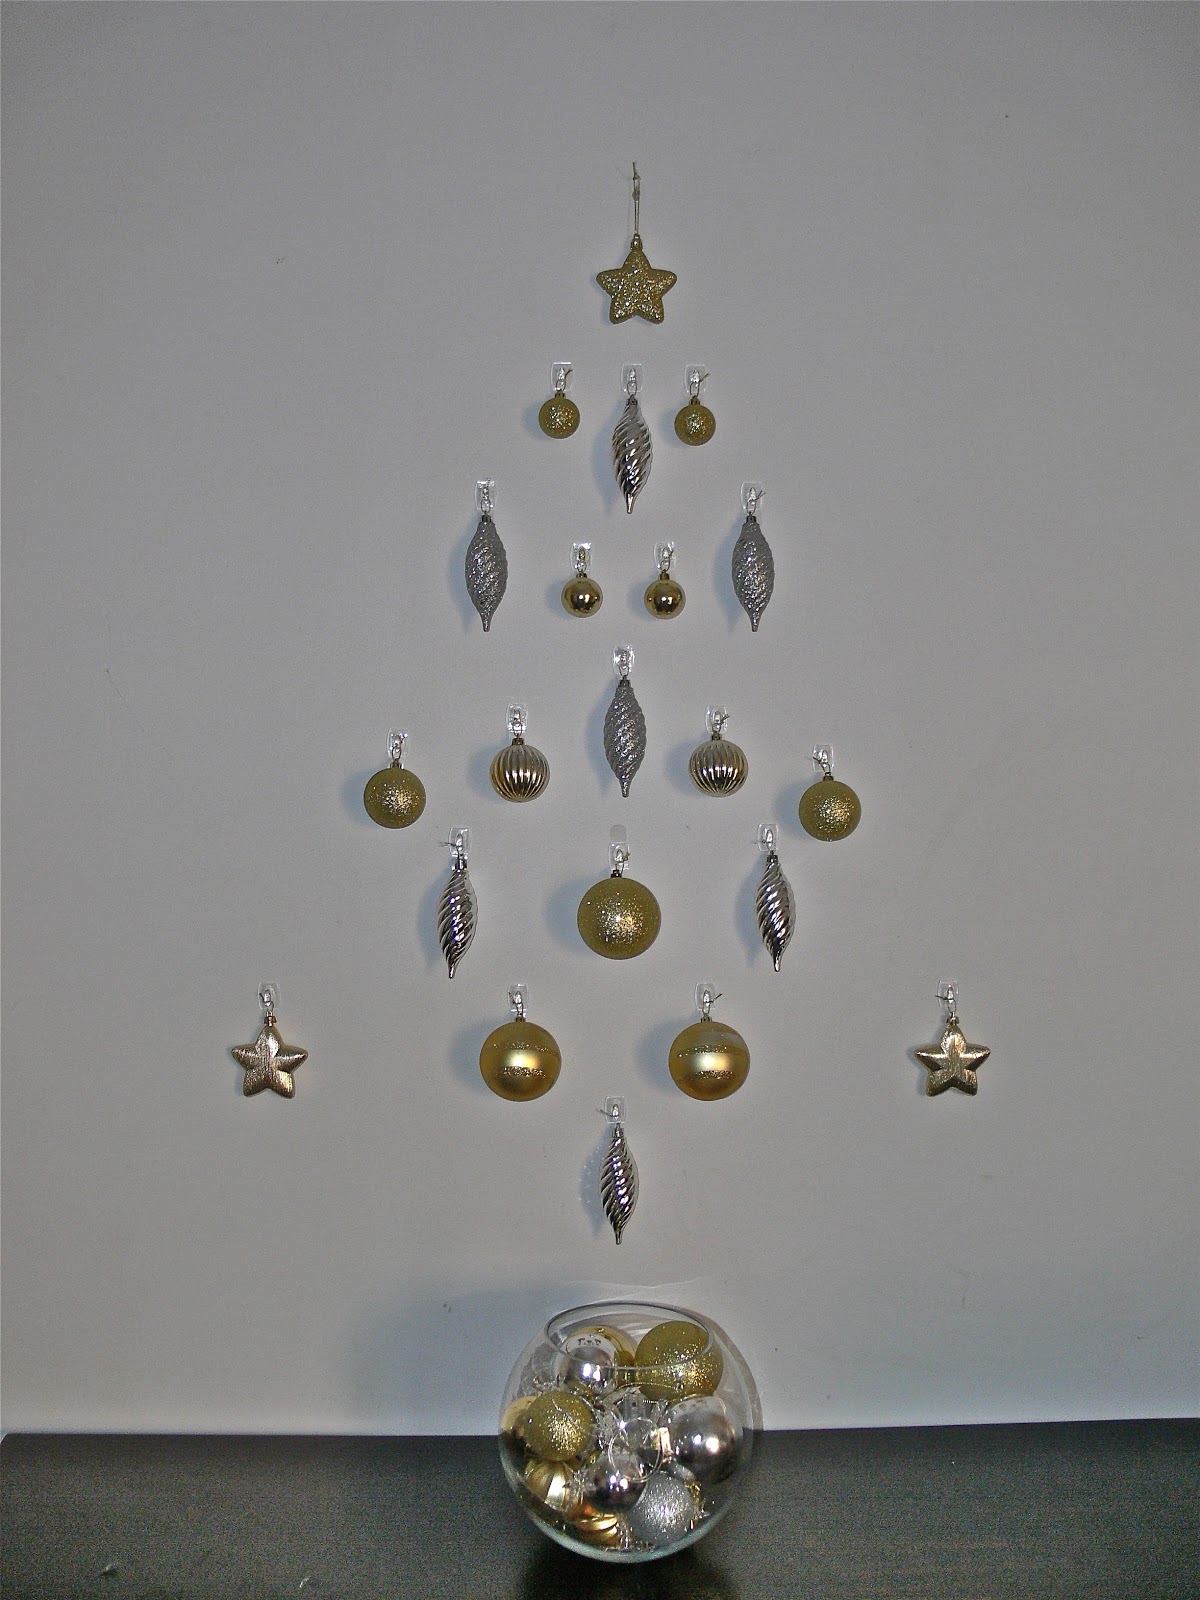 Command Wall Hooks Tree Christmas Lights